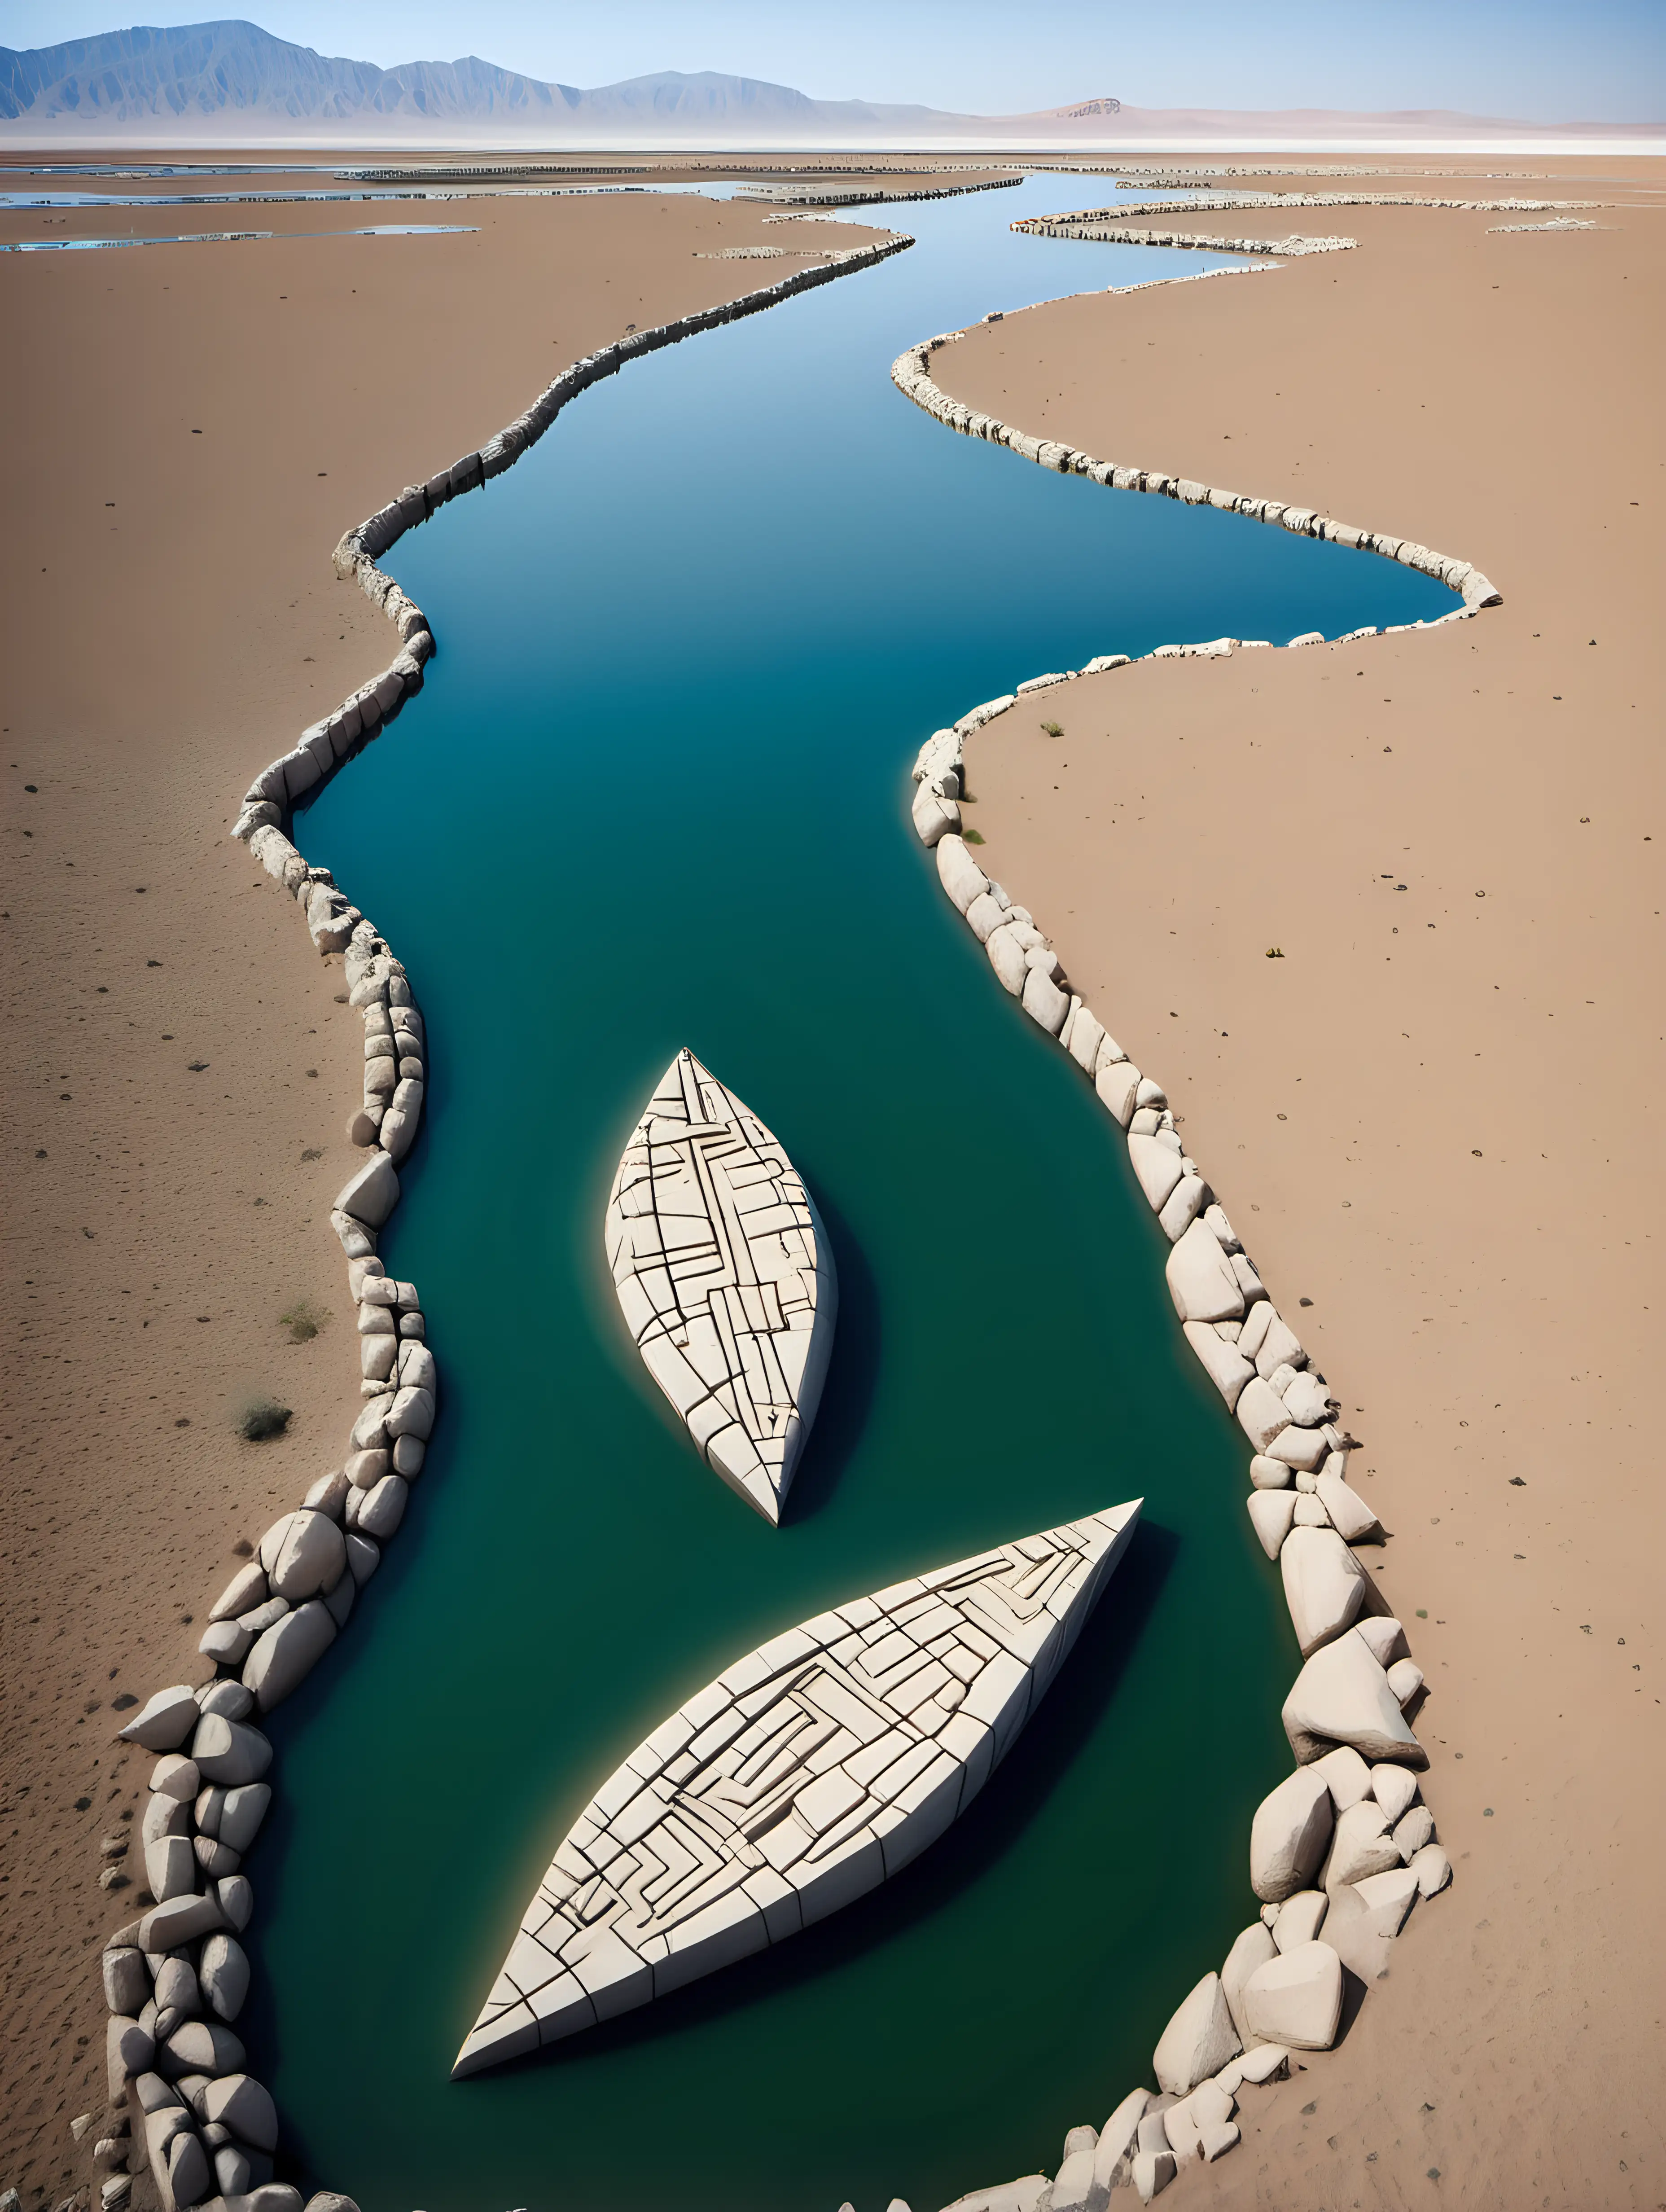 Desert Lake Landscape Unique Ship Hull Formed by Curved Boulders